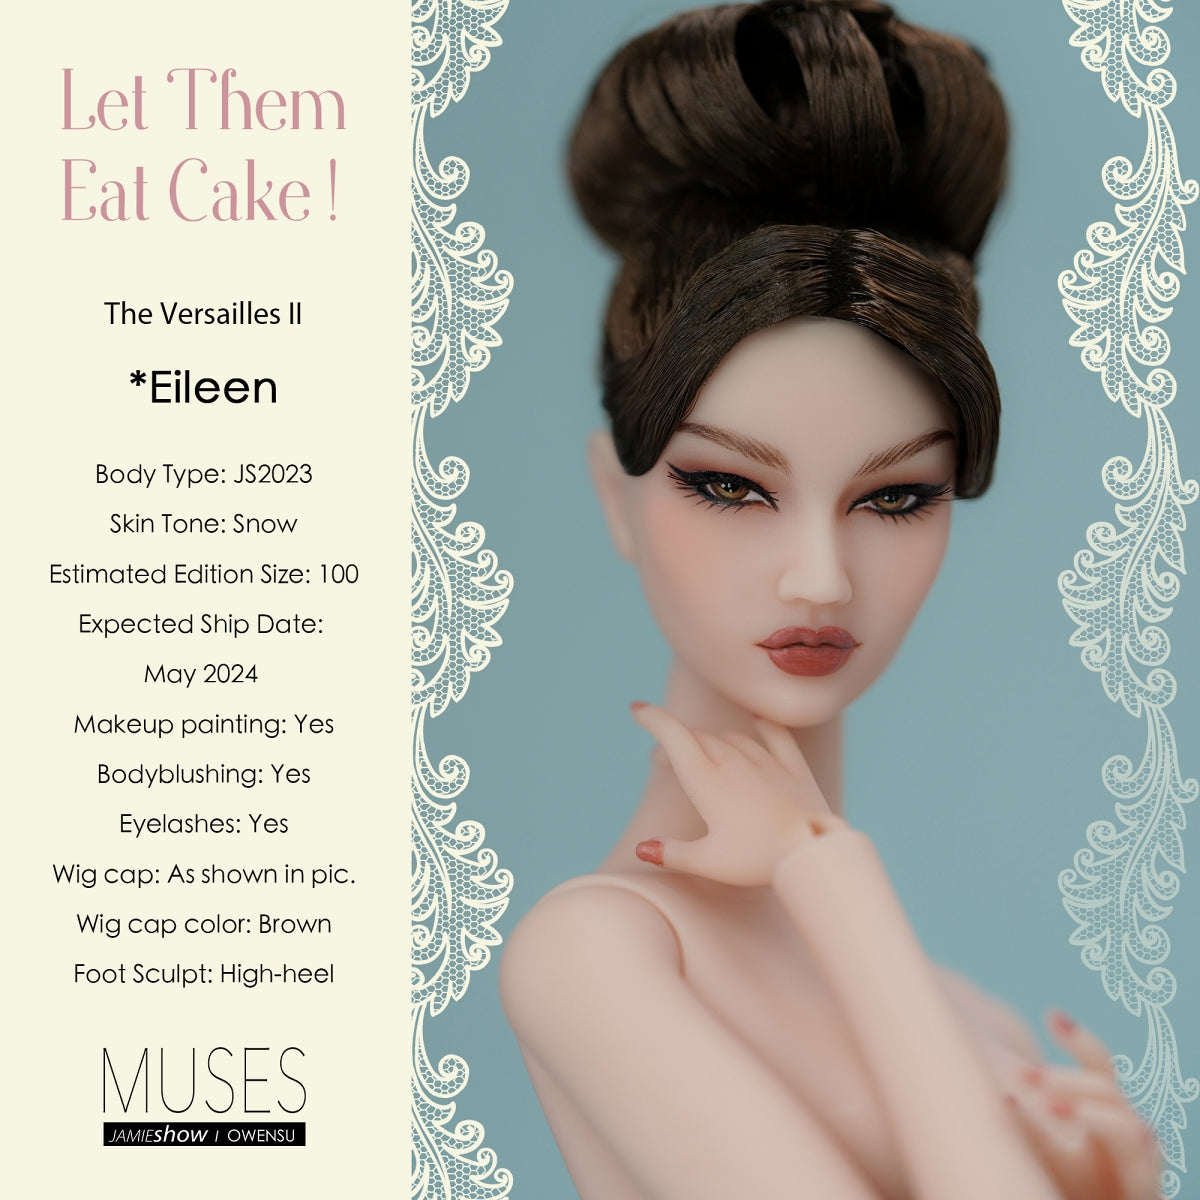 Versailles II "Let Them Eat Cake" Eileen